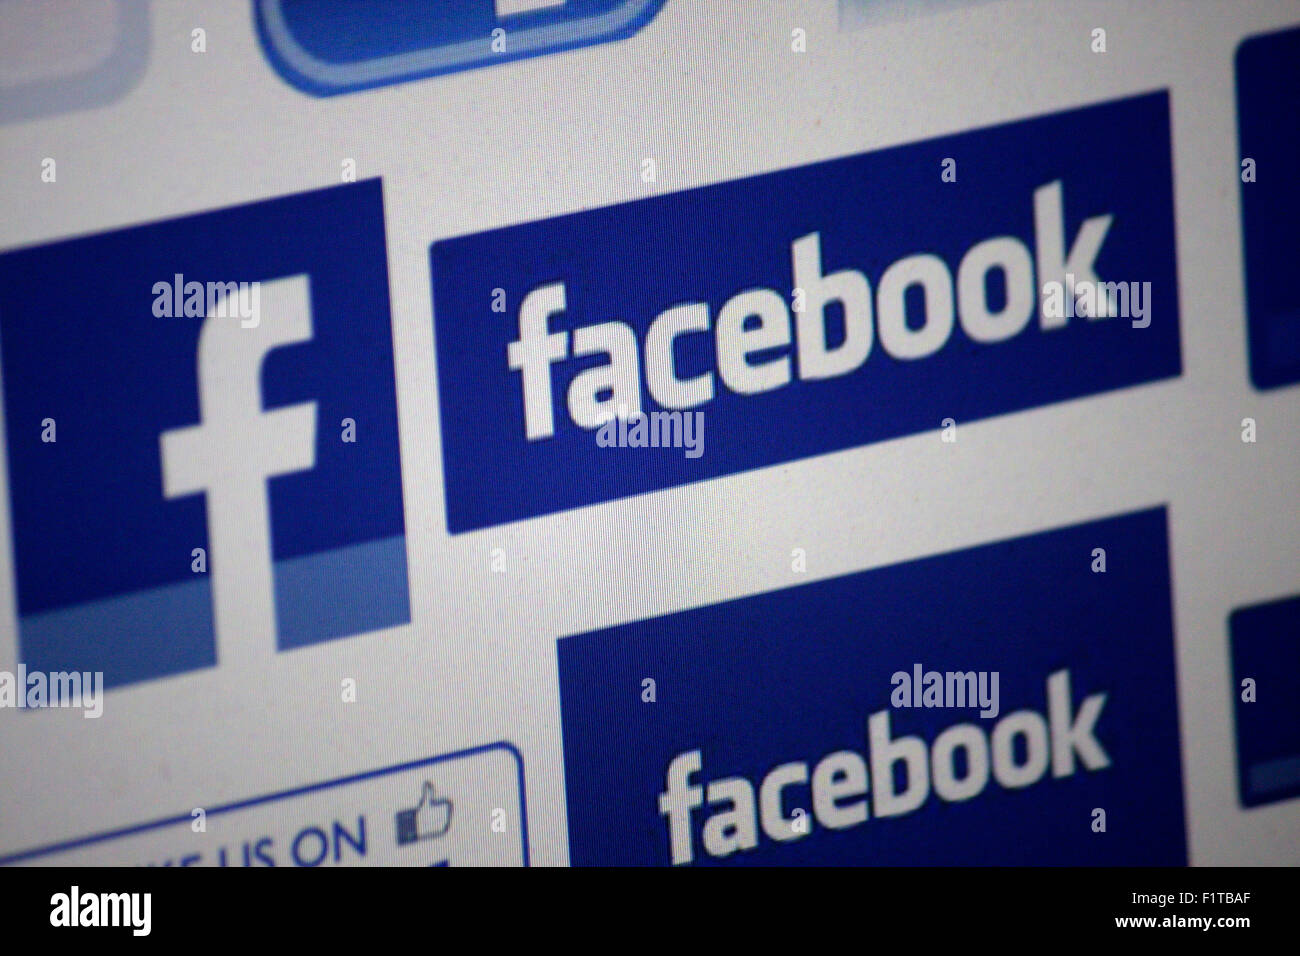 Markenname: "Facebook", Dezember 2013, Berlin. Stockfoto